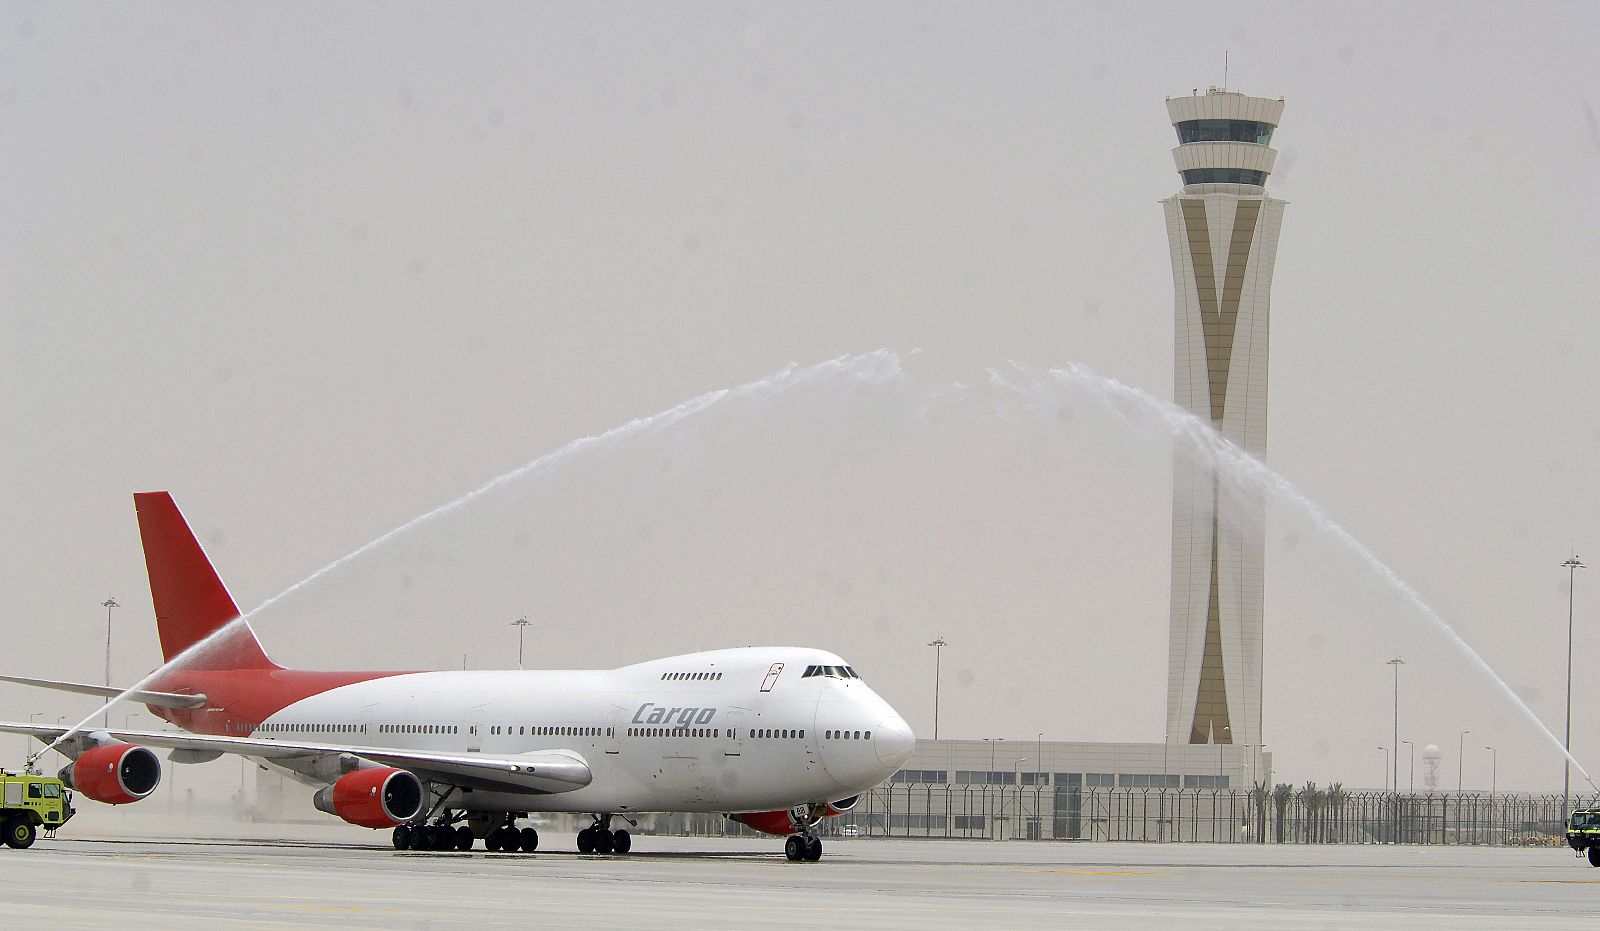 Un avión de carga llega al Dubai World Central-Al Maktoum International airport